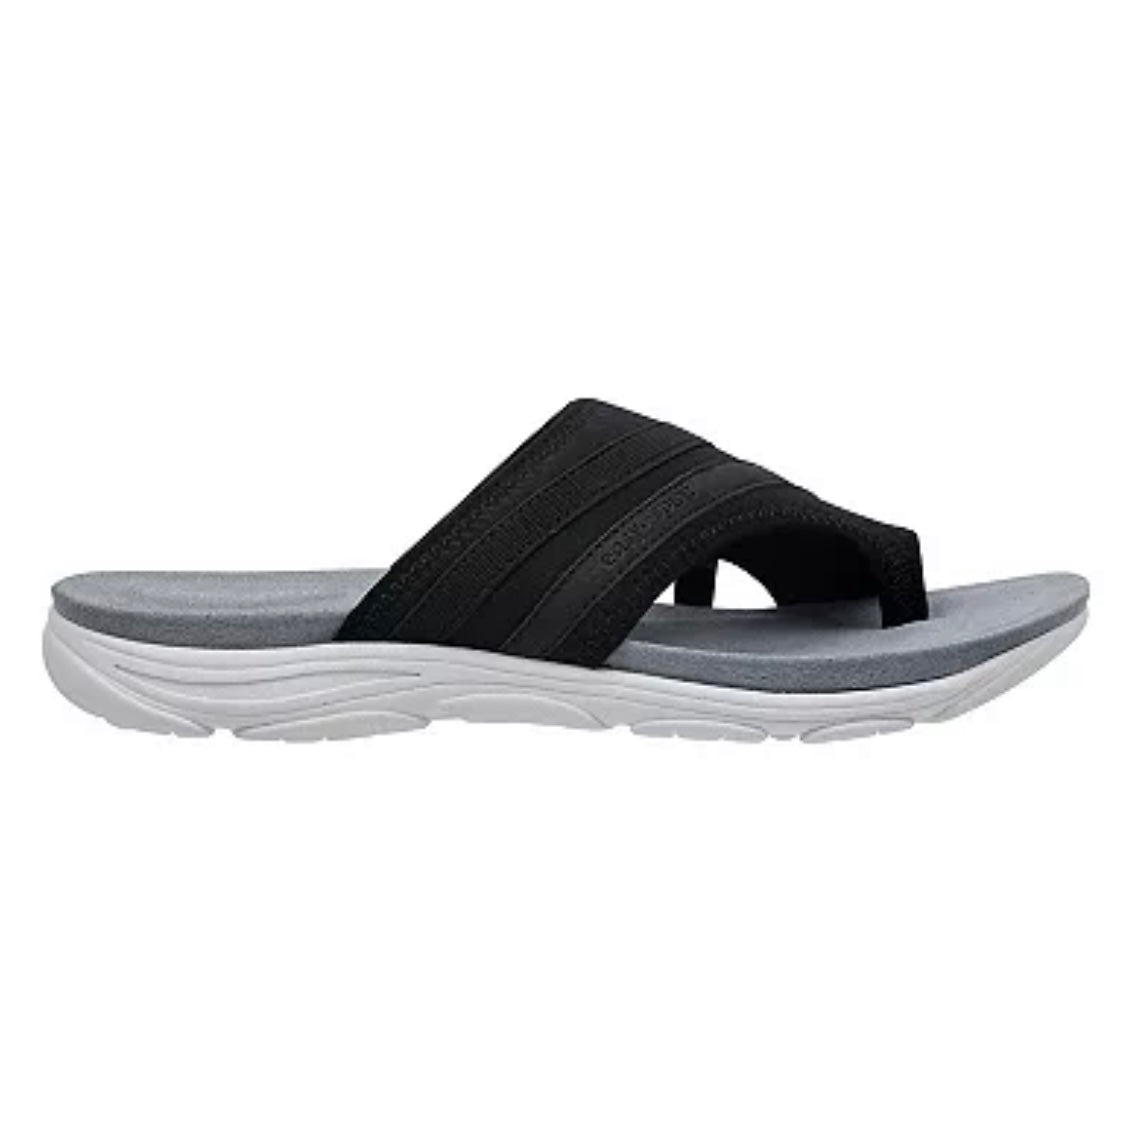 LOLA Casual Ring Toe Flats Sandals Black Women's Shoes